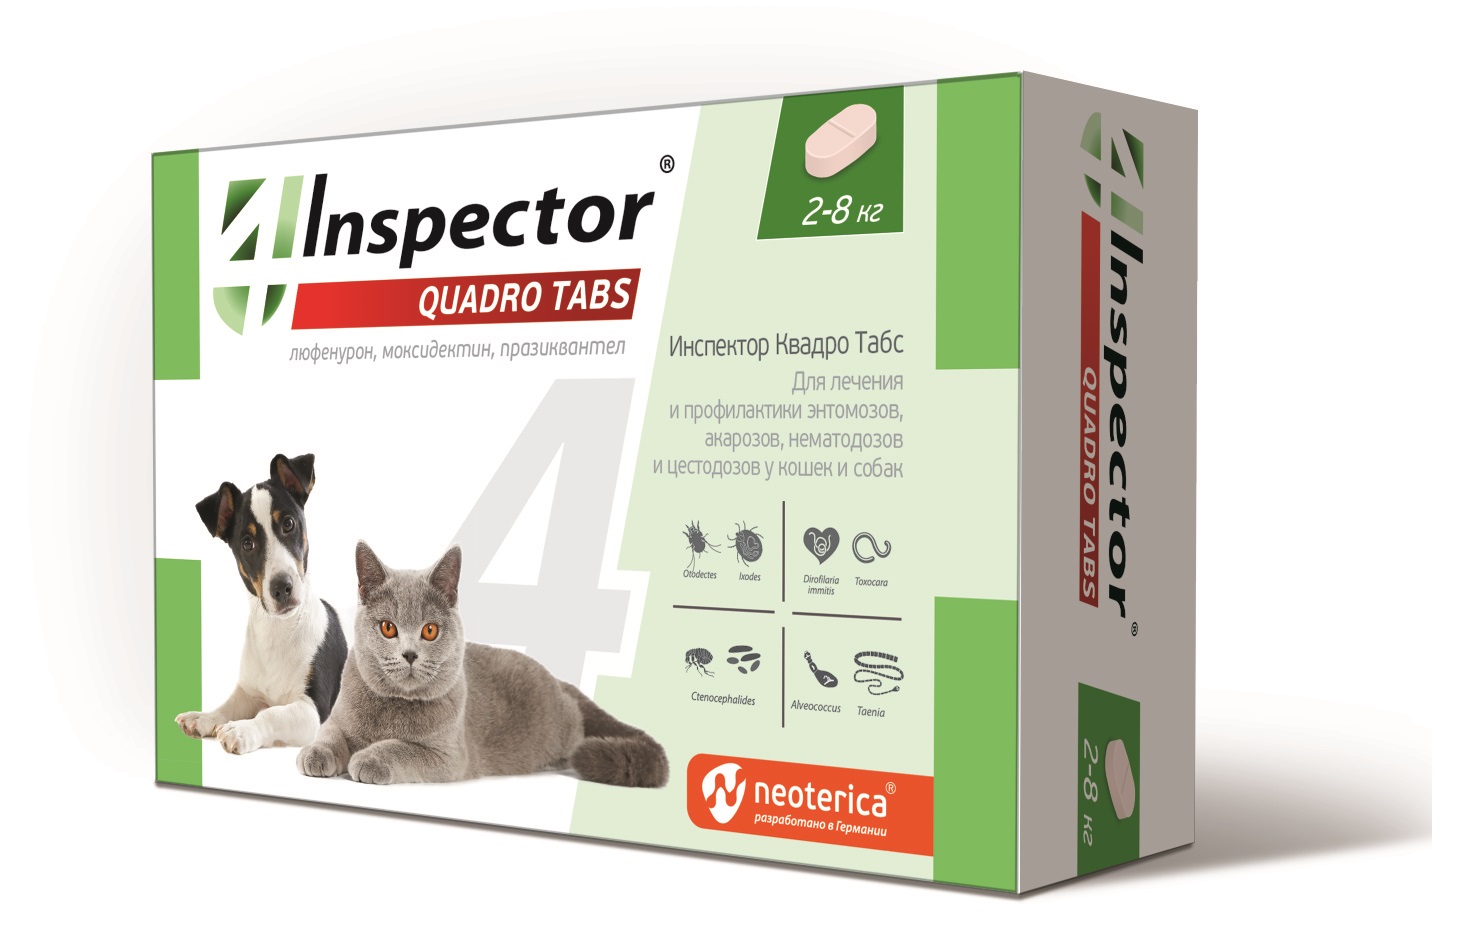  Инспектор Quadro Табс для кошек и собак 2-8 кг цена за 1 таб для питомцев
